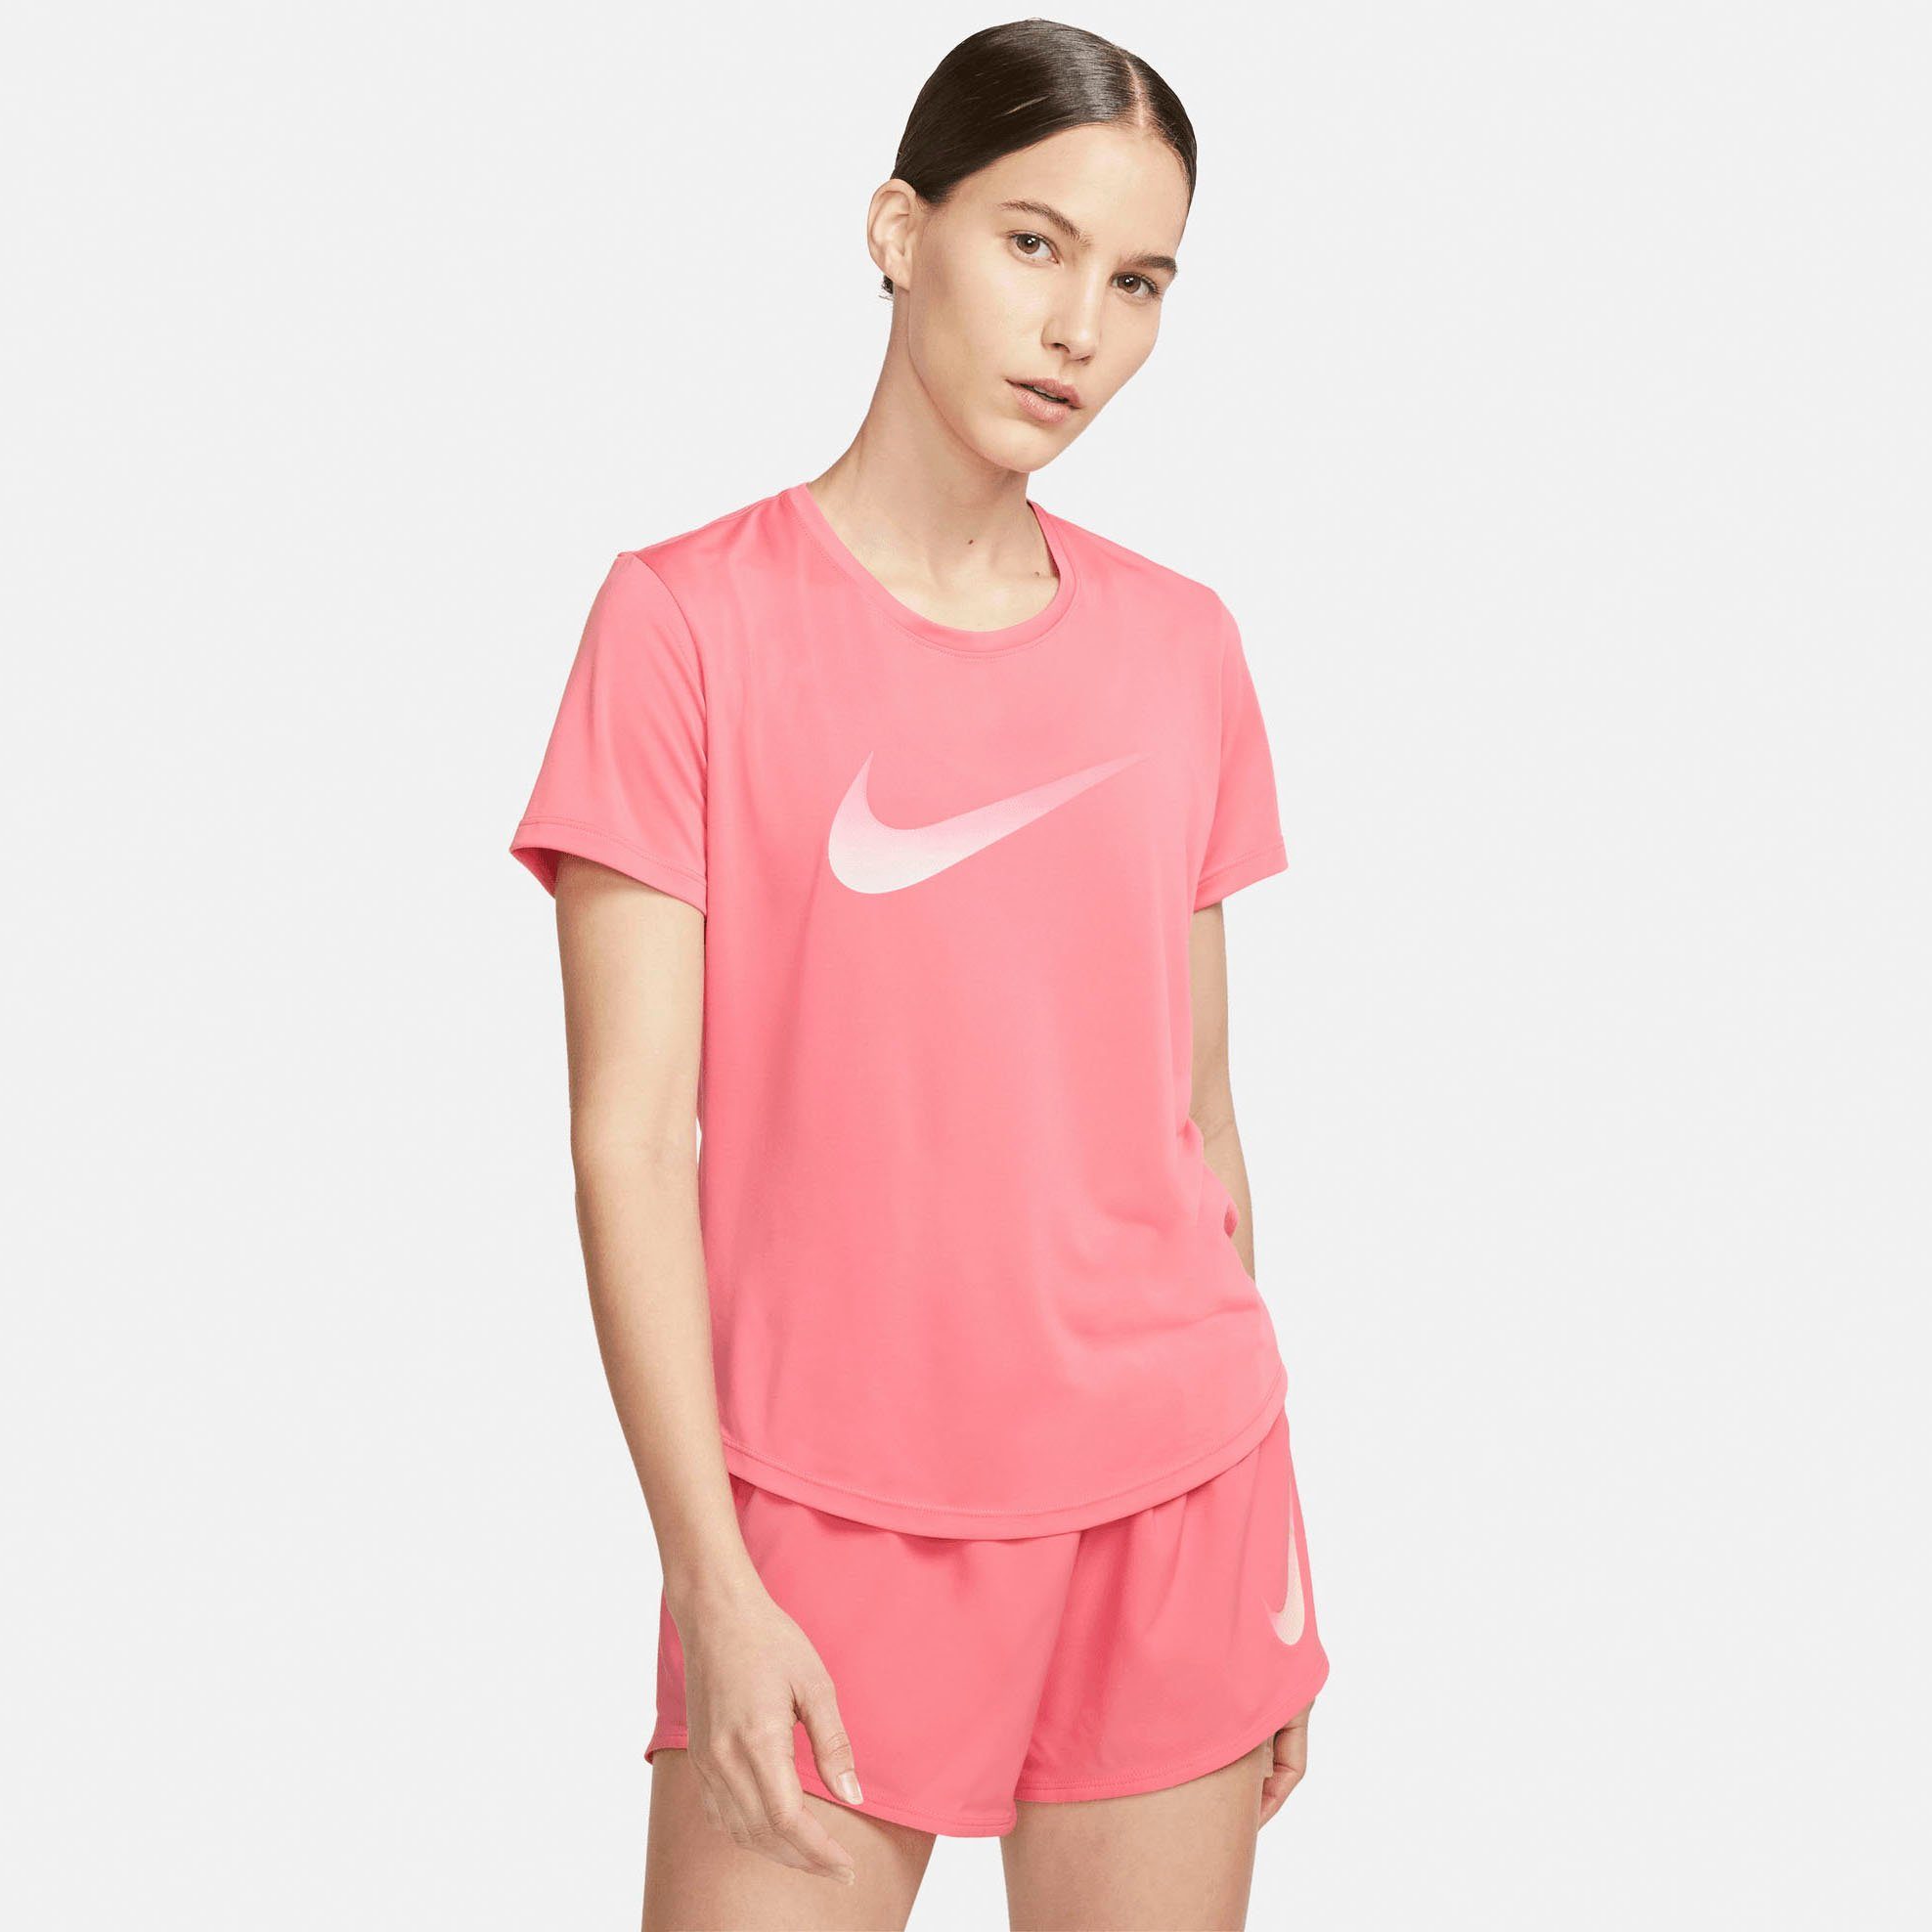 Women's Top Swoosh Nike Laufshirt orange Dri-FIT Short-Sleeved One